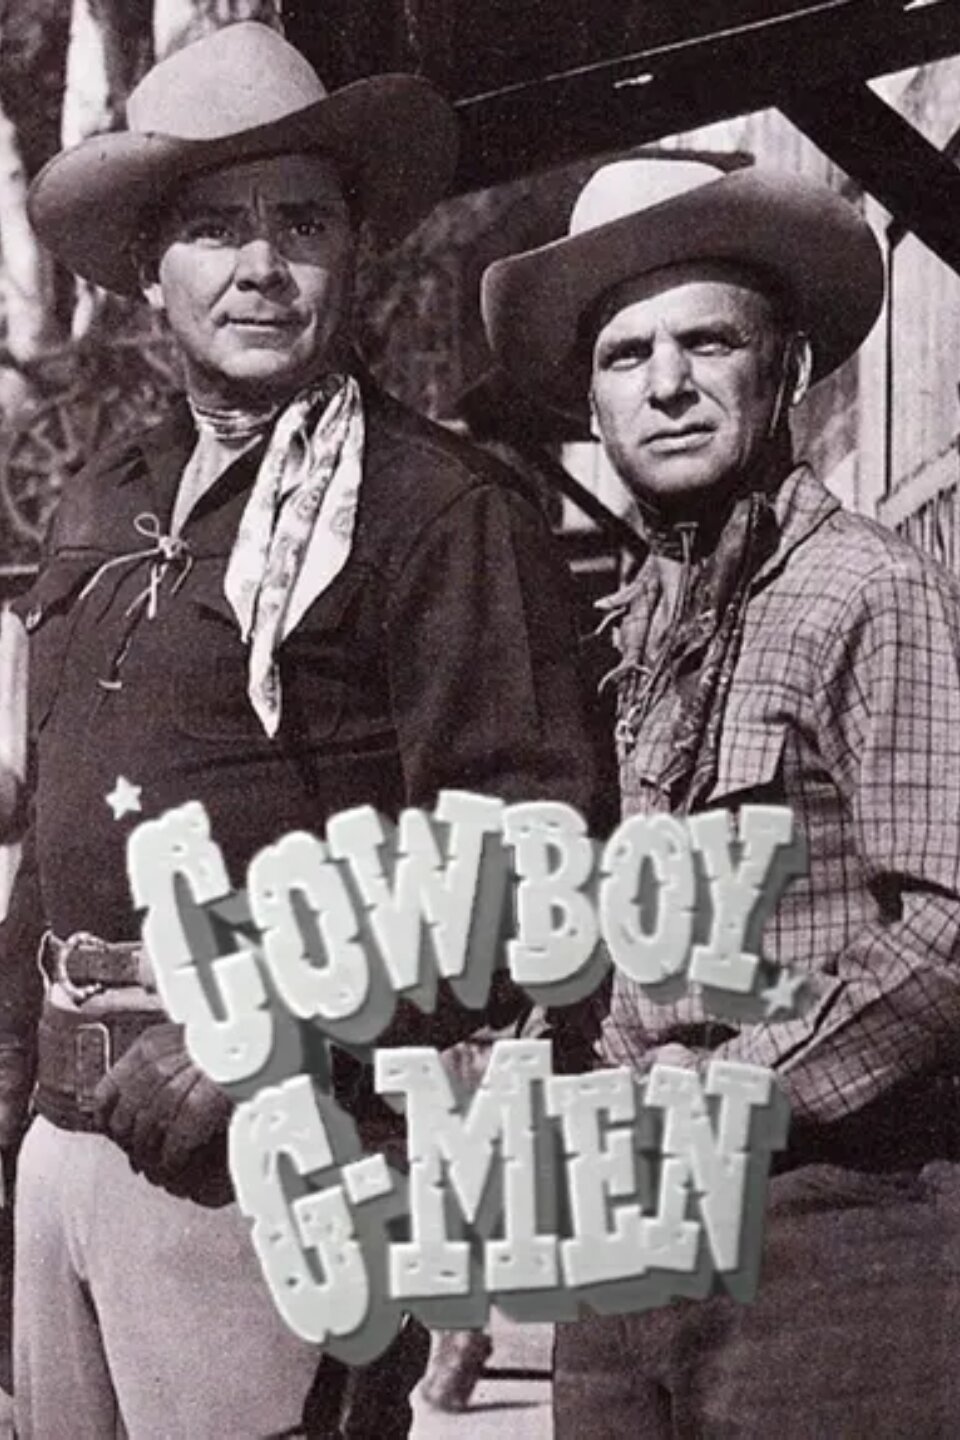 Cowboy G-Men ne zaman